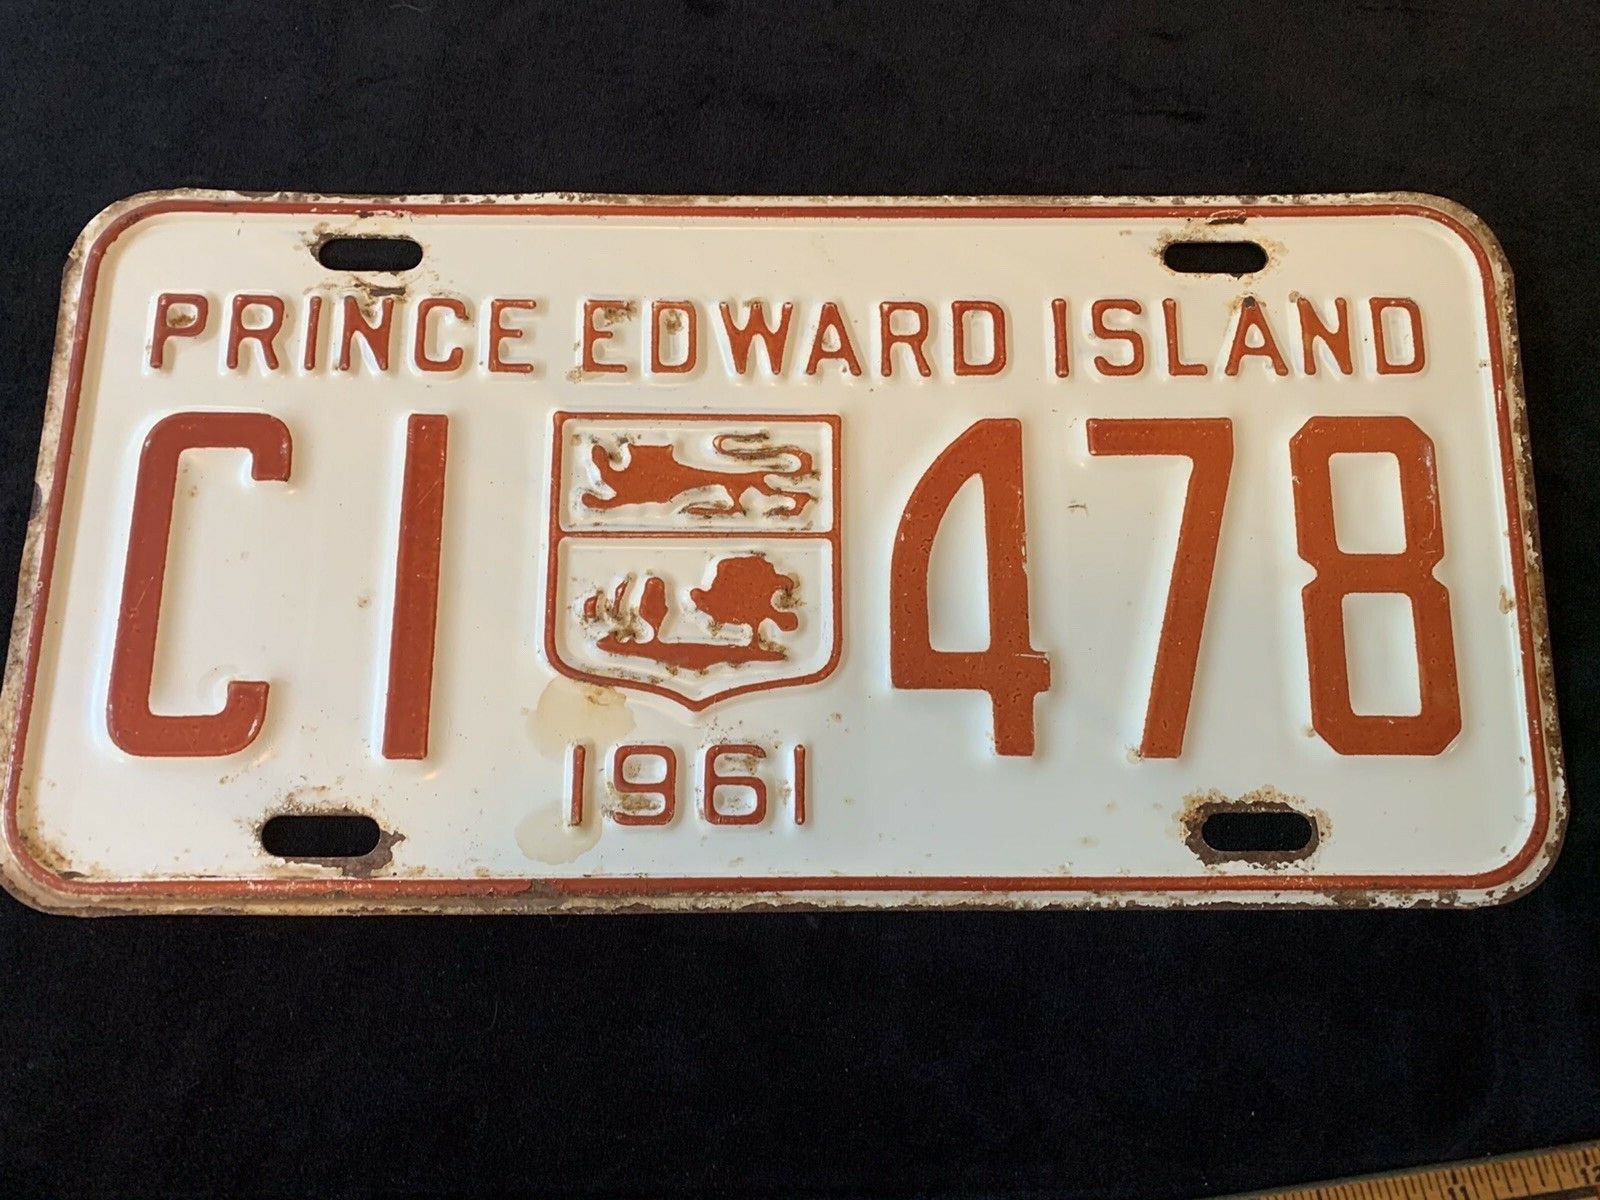 1961 PRINCE EDWARD ISLAND  LICENSE PLATE  C1 478